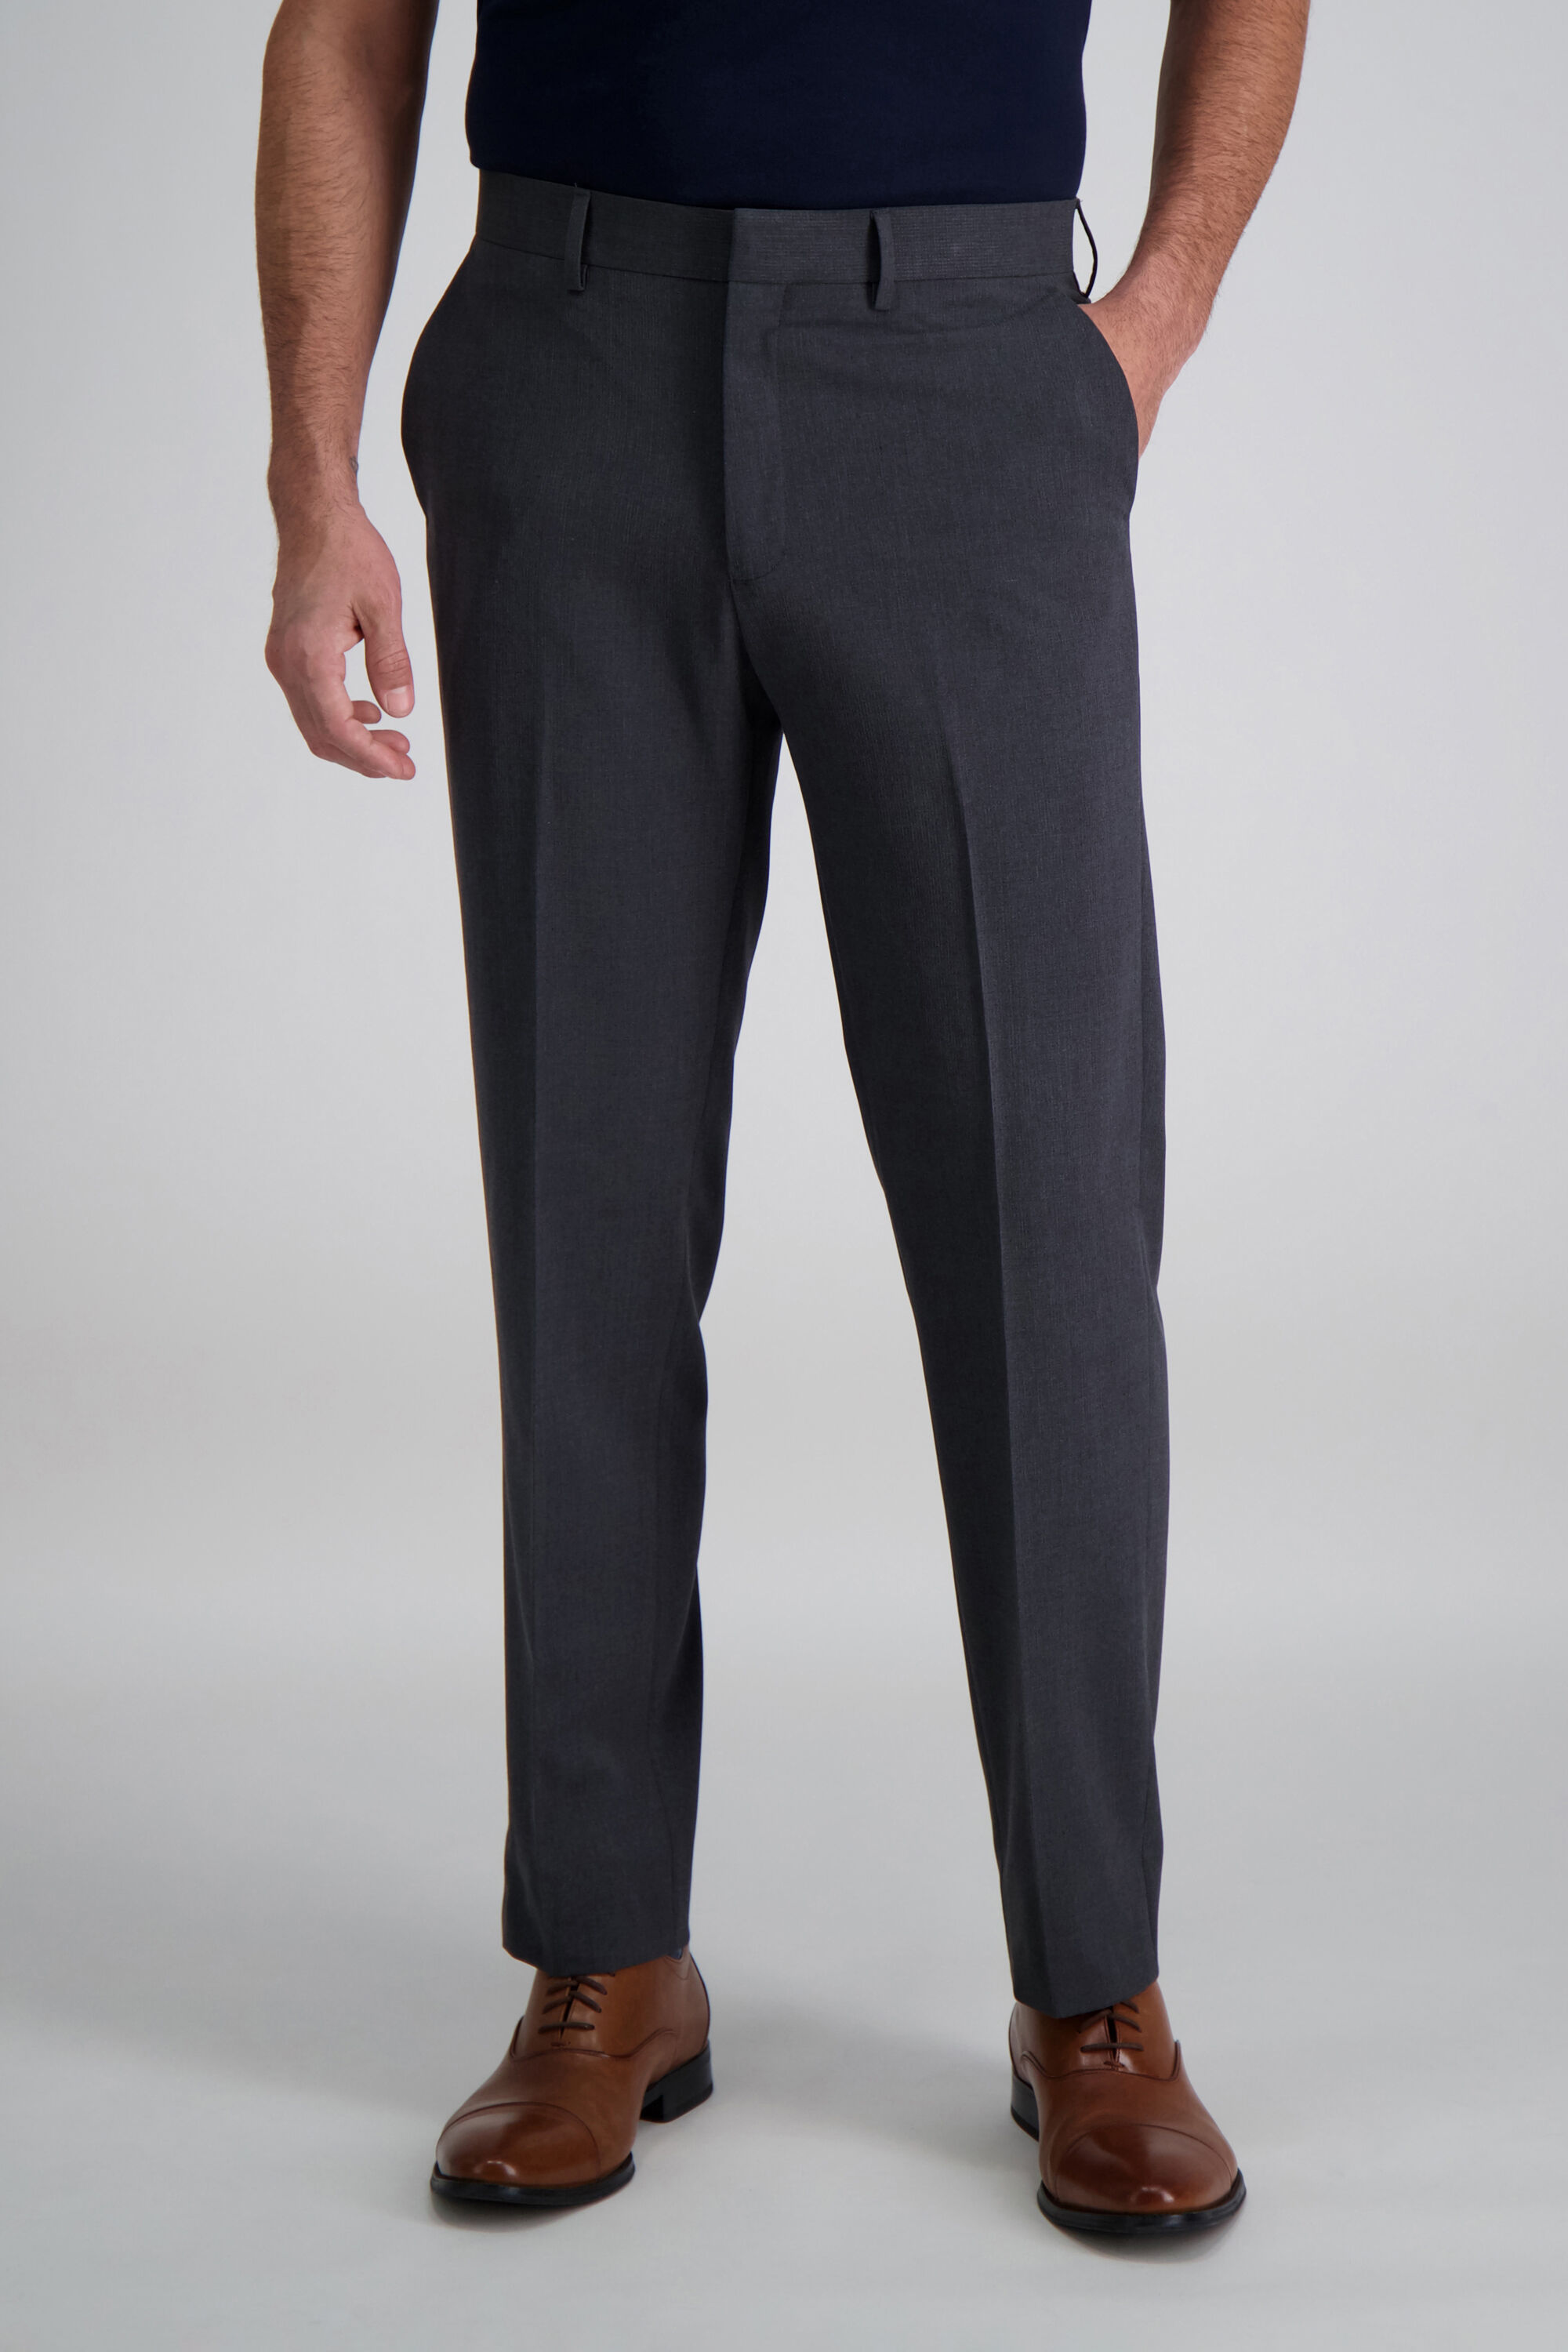 JM Haggar Mens Premium Stretch Suit Separate Pant Classic Fit HY00182   Walmartcom